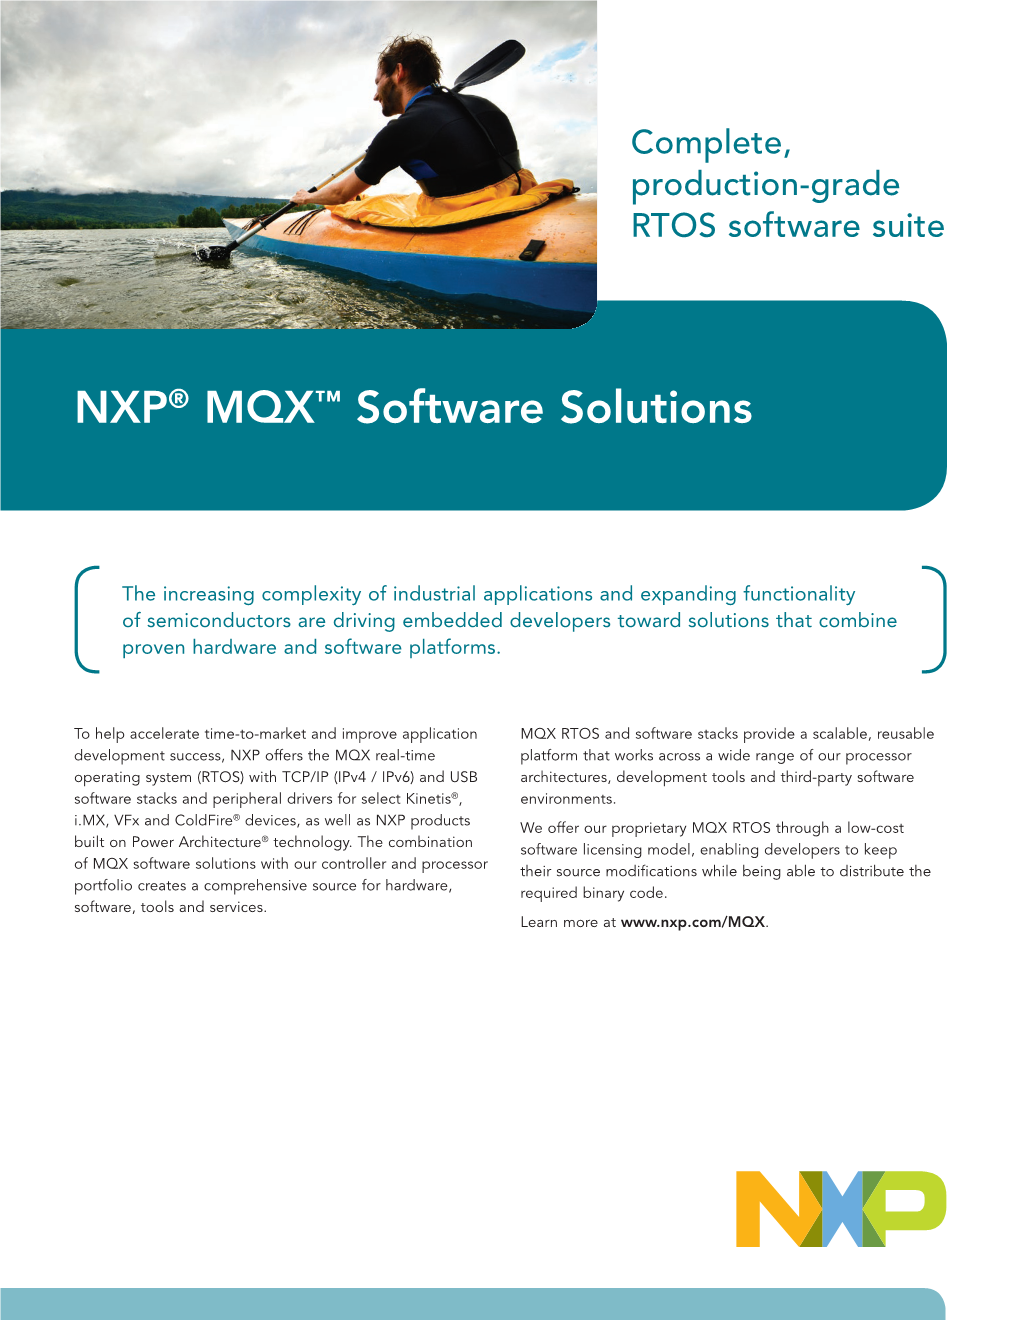 MQX Software Solutions Fact Sheet